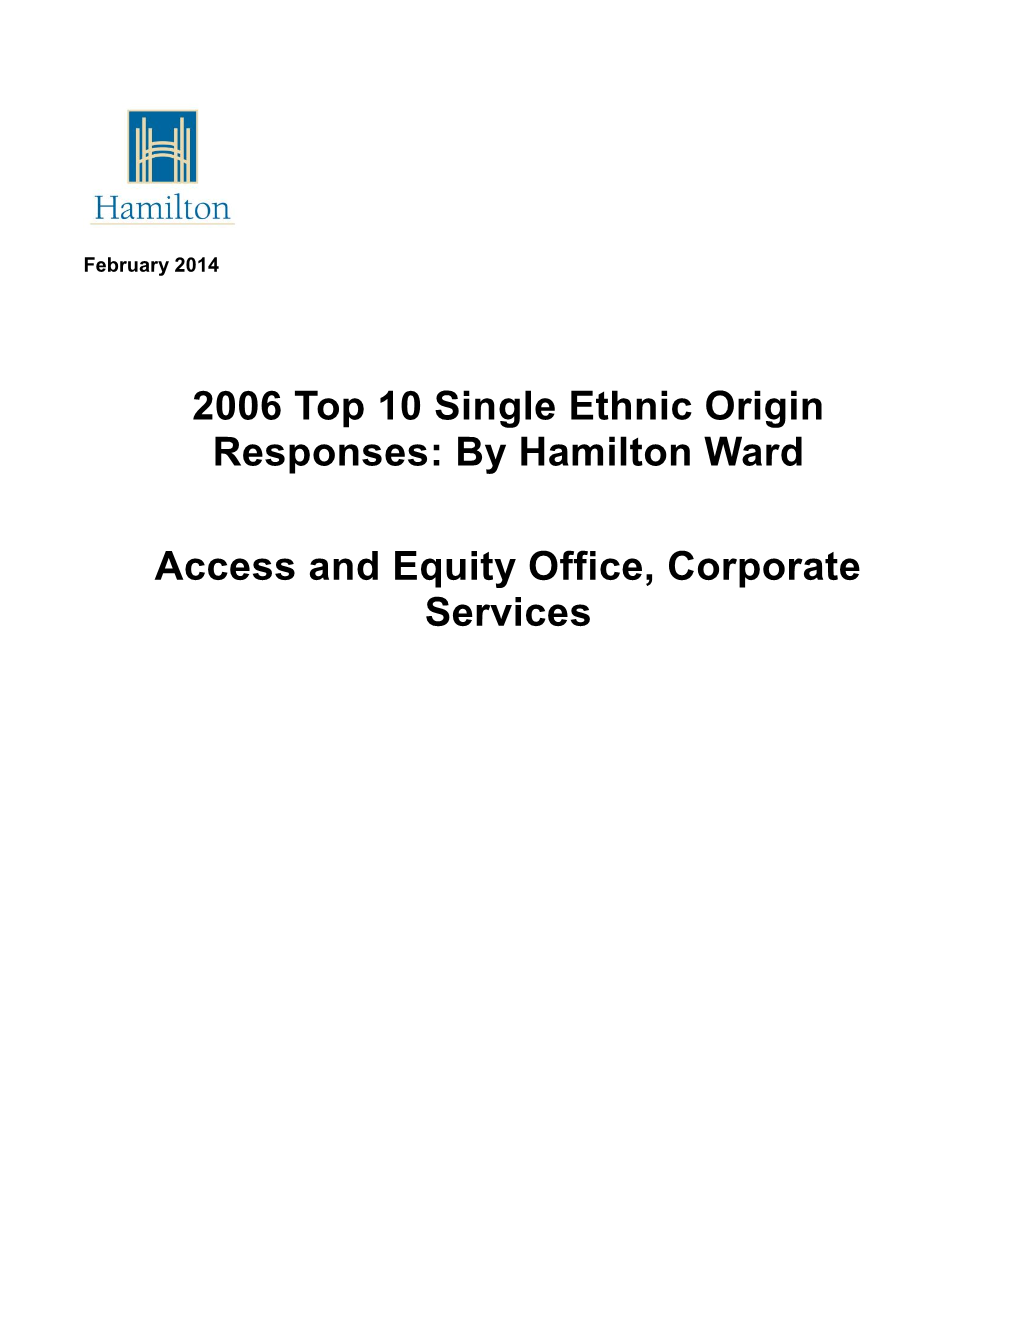 2006 Top 10 Single Ethnic Origin Responses: by Hamilton Ward